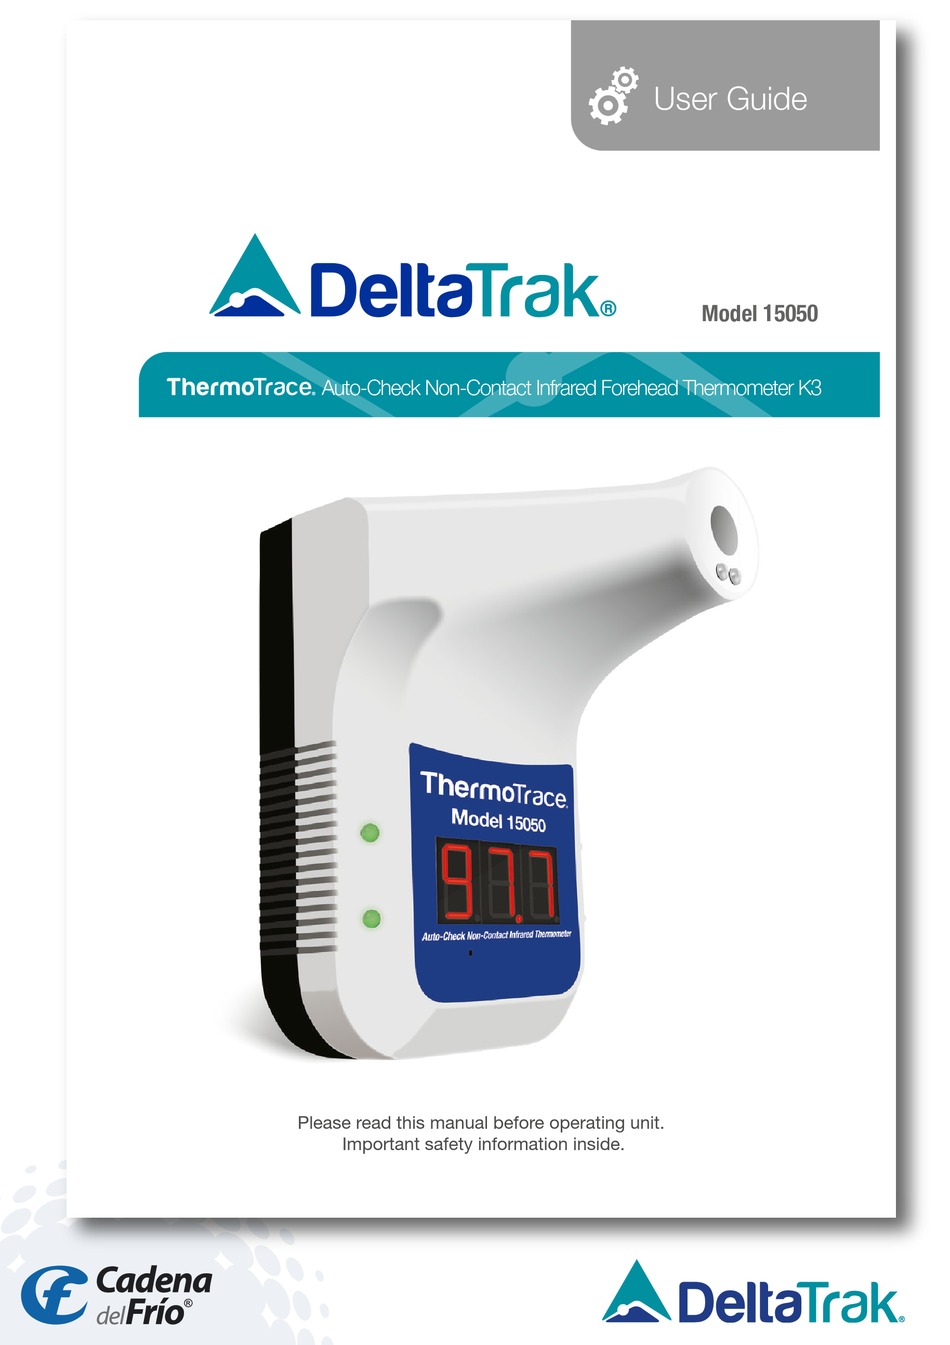 DELTATRAK 12215 Certified Alarm Thermometer